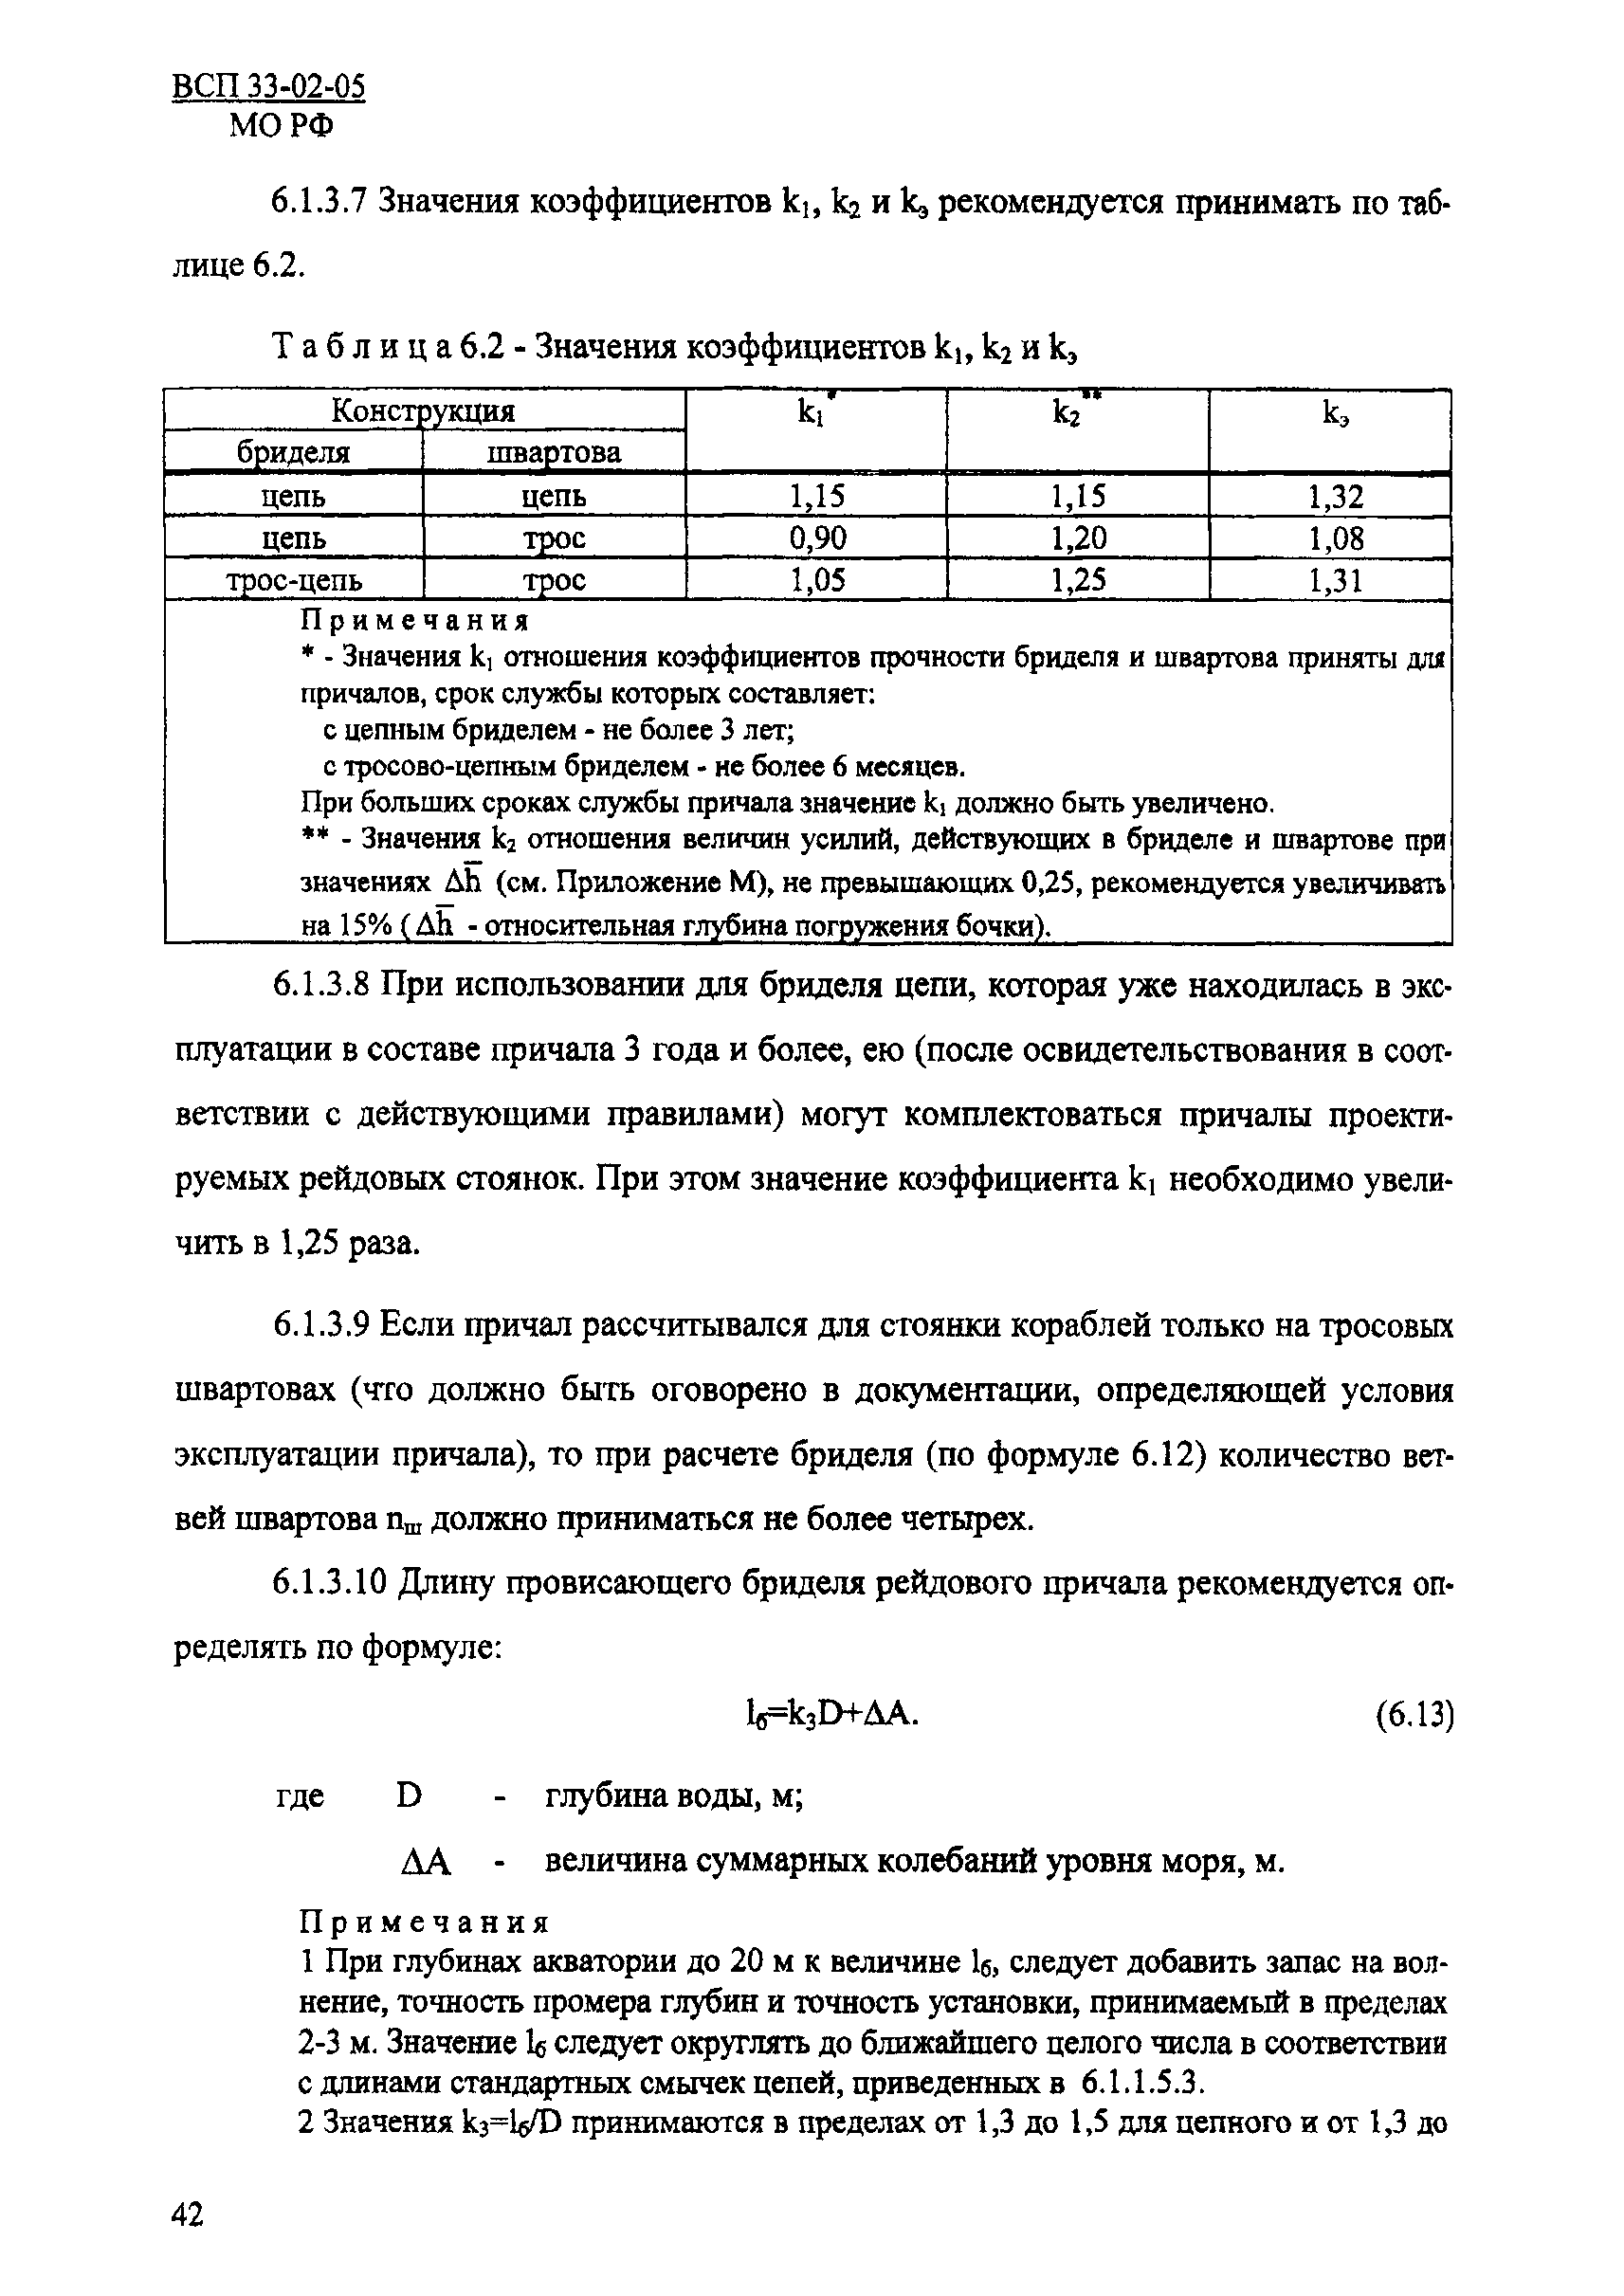 ВСП 33-02-05 МО РФ